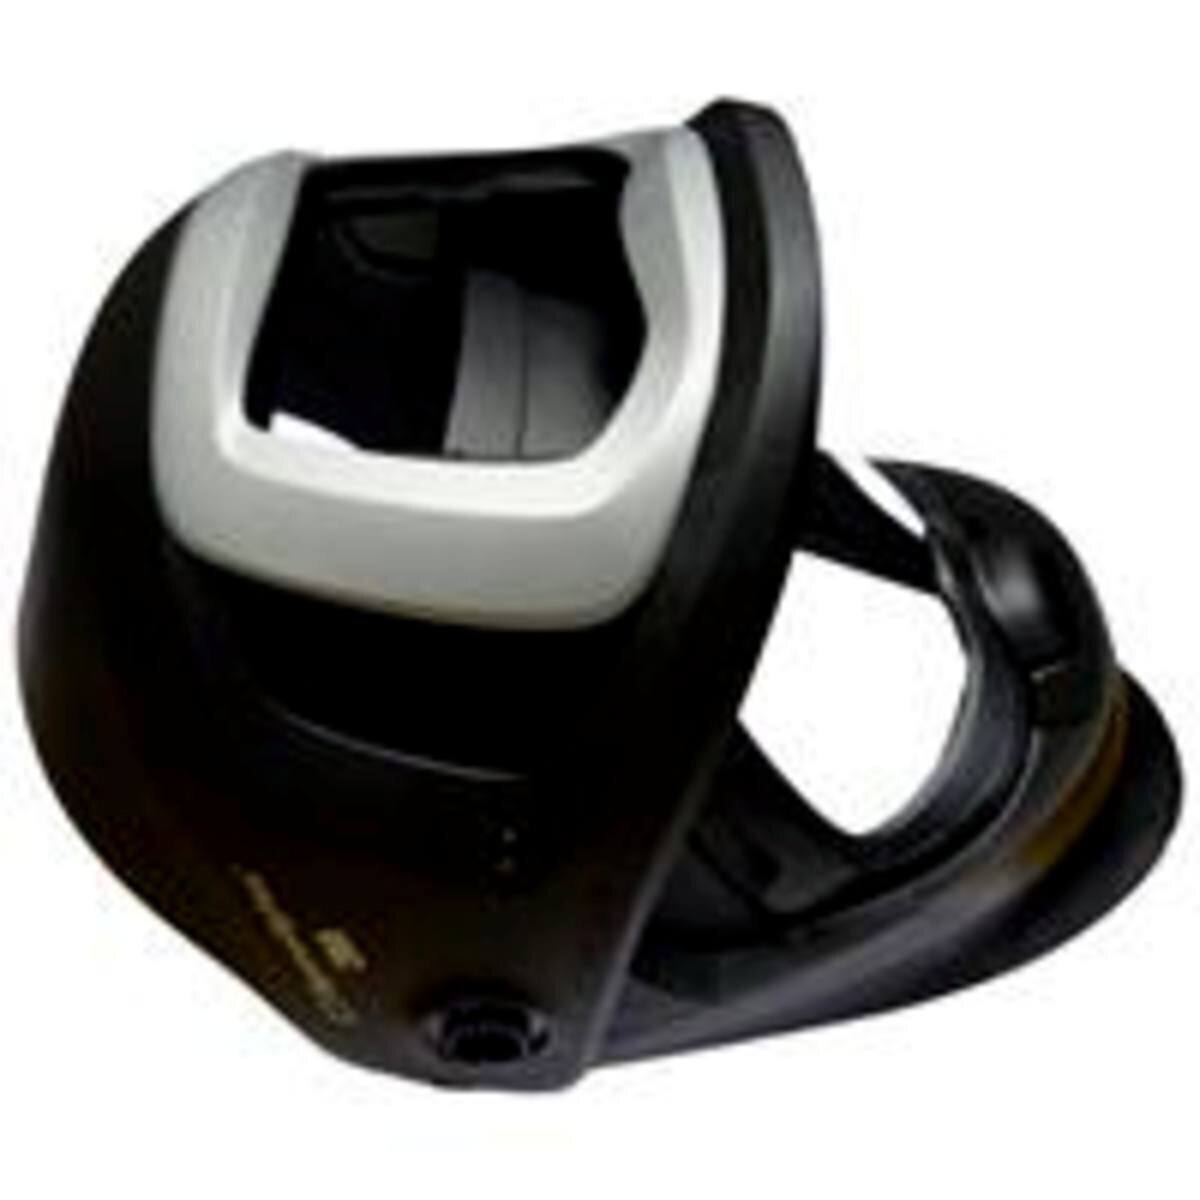 Maschera per saldatura 3M Speedglas 9100 FX Air senza filtro automatico per saldatura ADF, con finestra laterale, senza fascia #541890